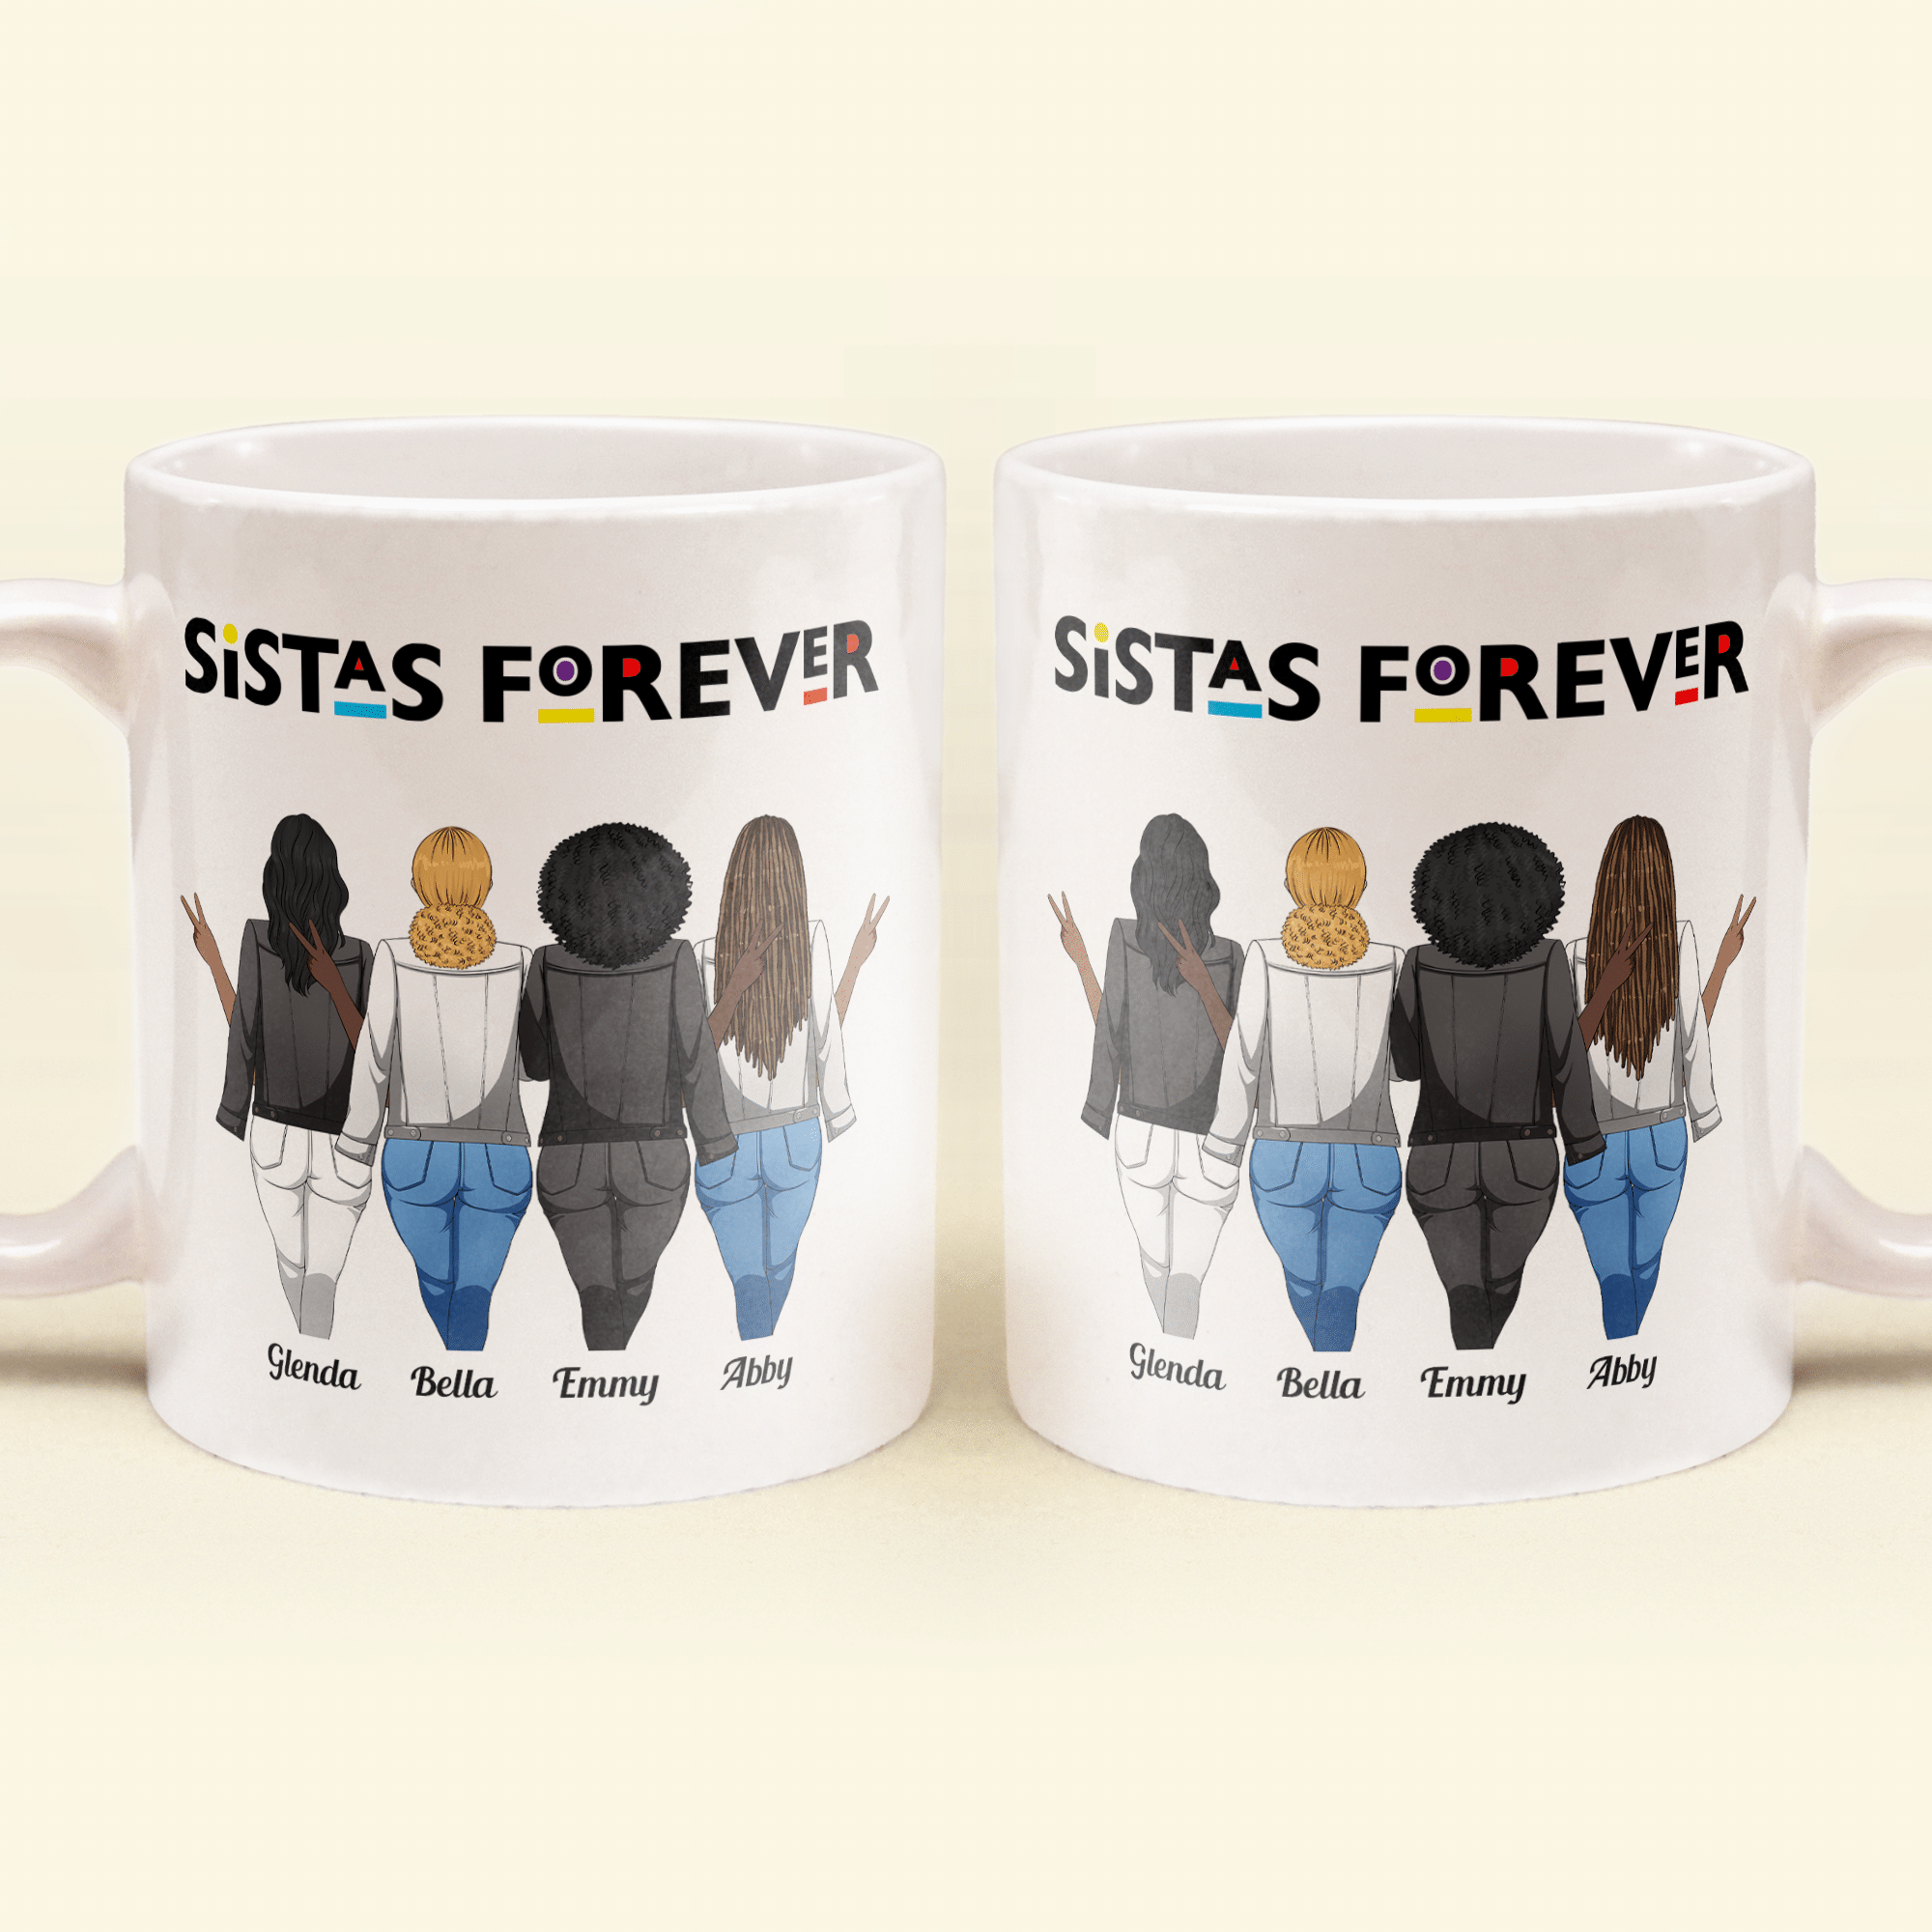 Sistas Forever - Personalized Mug  - Birthday Gift For Sista, Sister, Soul Sister, Best Friend, BFF, Bestie, Friend - Standing Girls Illustration